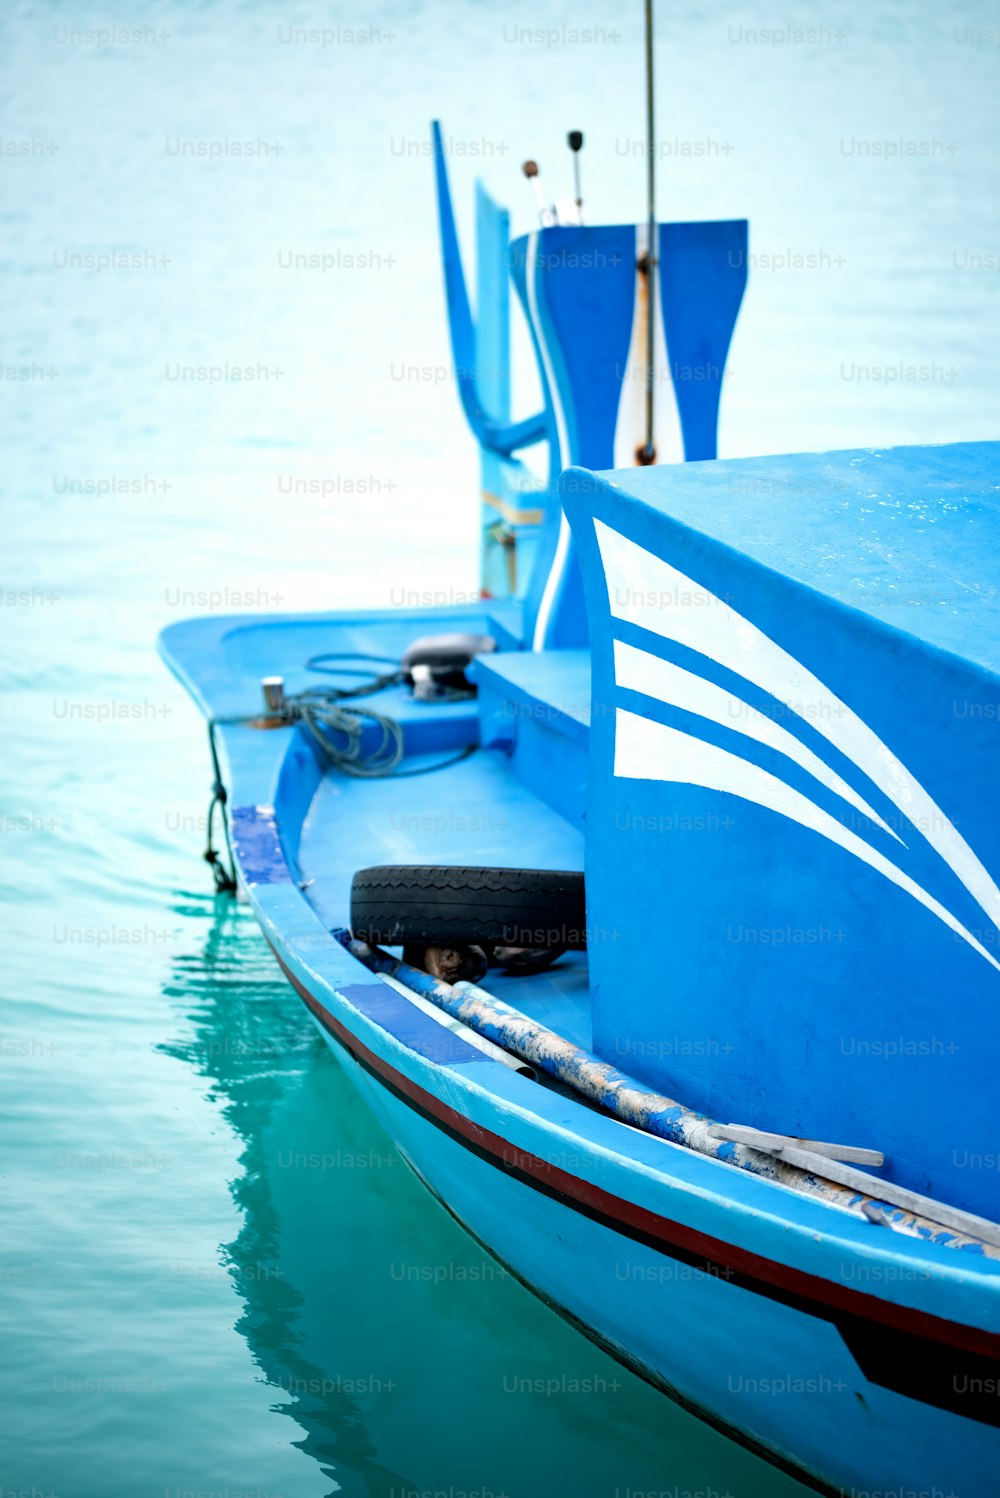 Un pequeño bote azul flotando sobre un cuerpo de agua